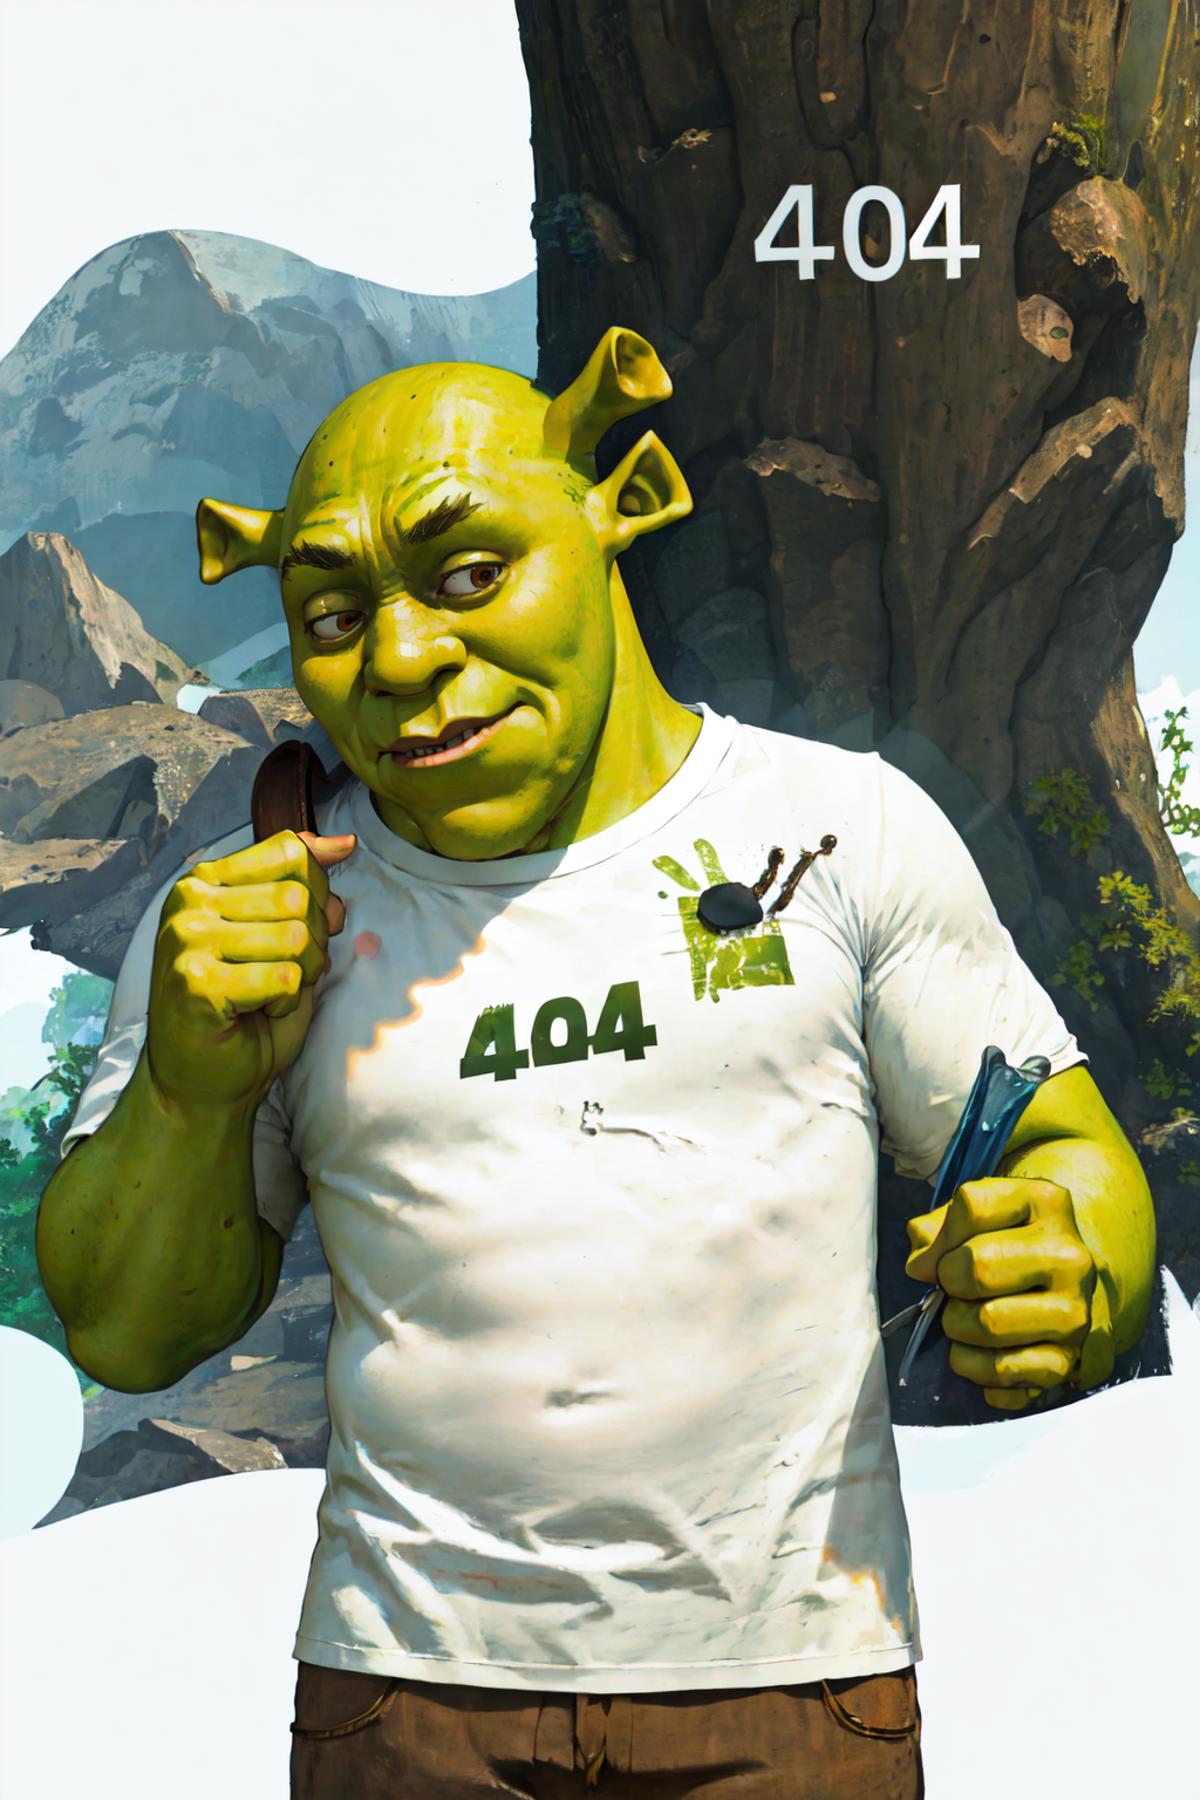 A cartoon image of a green creature wearing a white shirt.